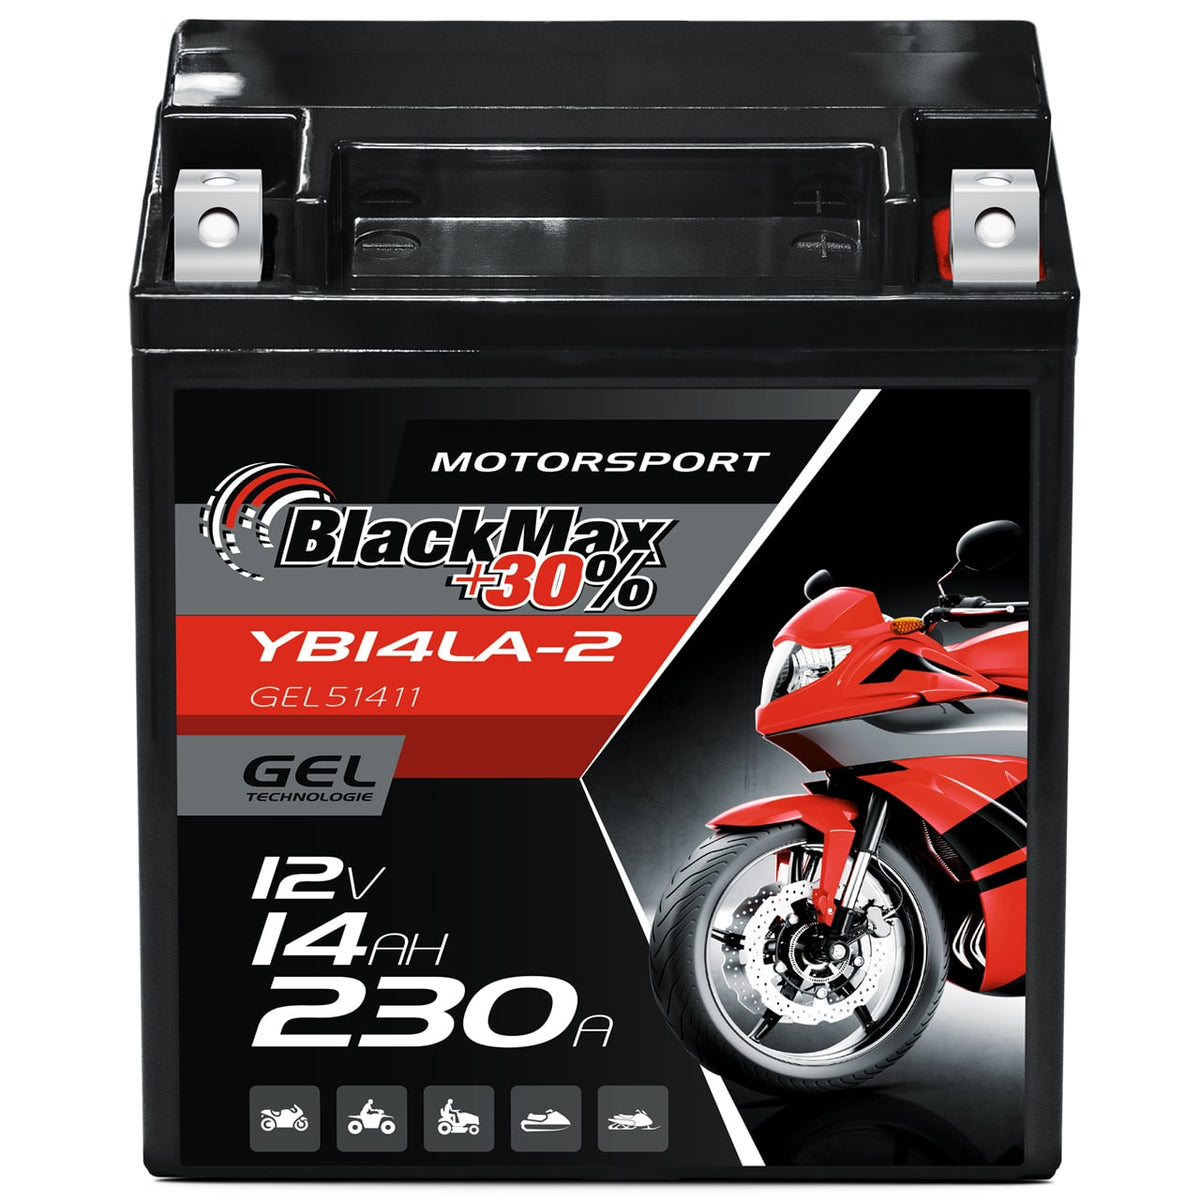 BlackMax +30% Motorsport 51411 GEL 12V 14Ah 230A/EN